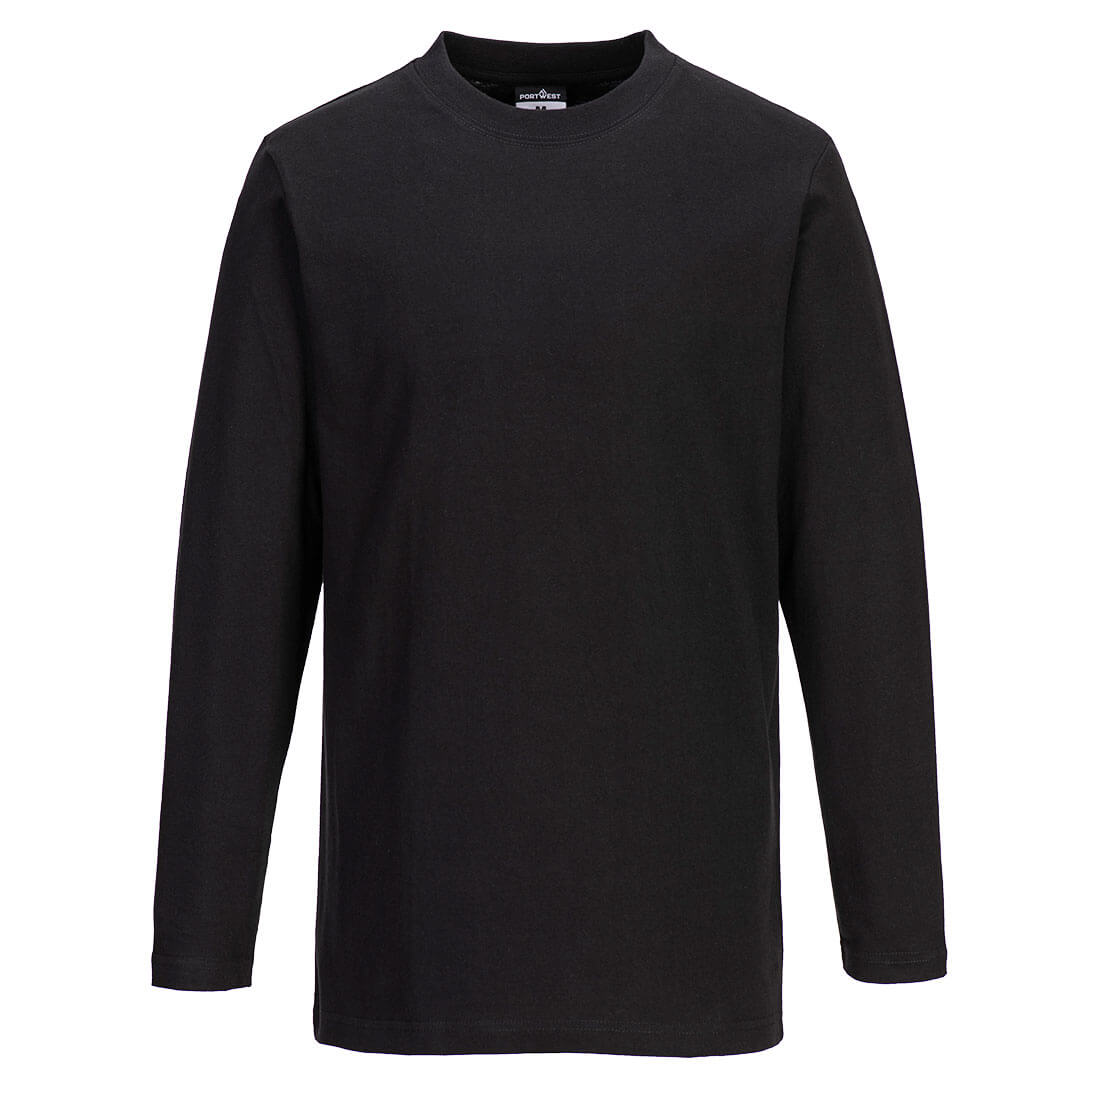 Portwest Long Sleeve T-Shirt - Workwear - Clothing - T Shirts - B196BKRM